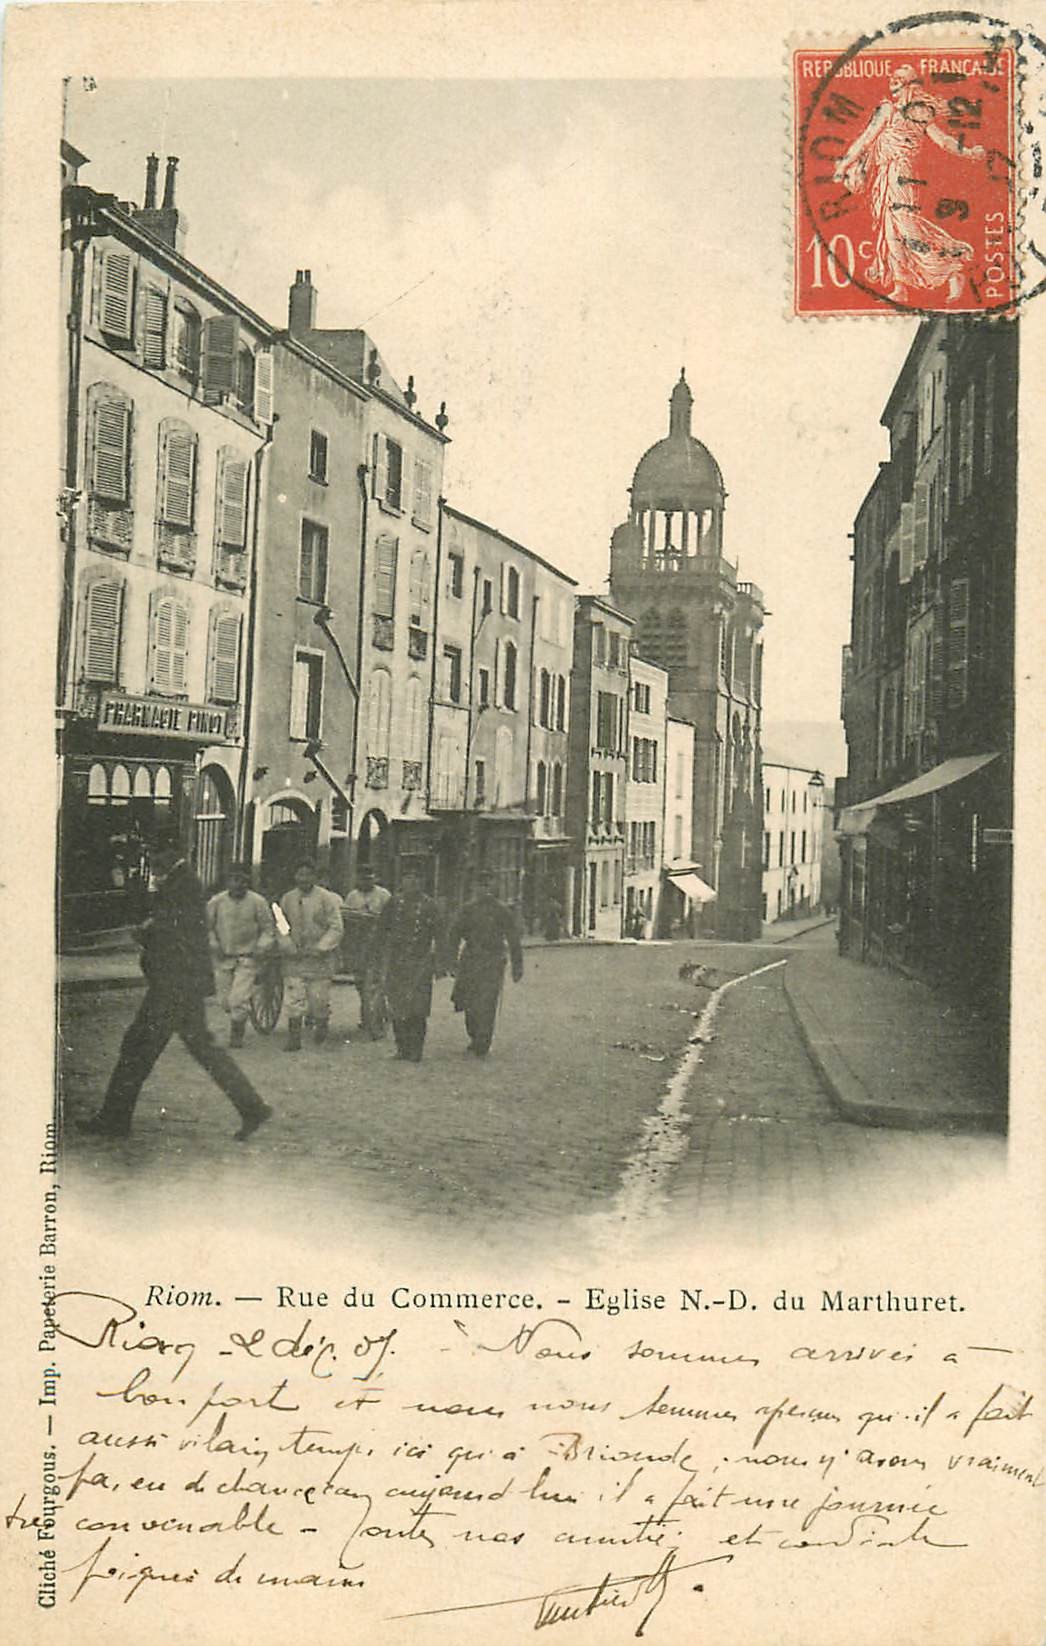 WW 63 RIOM. Militaires devant la Pharmacie rue du Commerce 1907